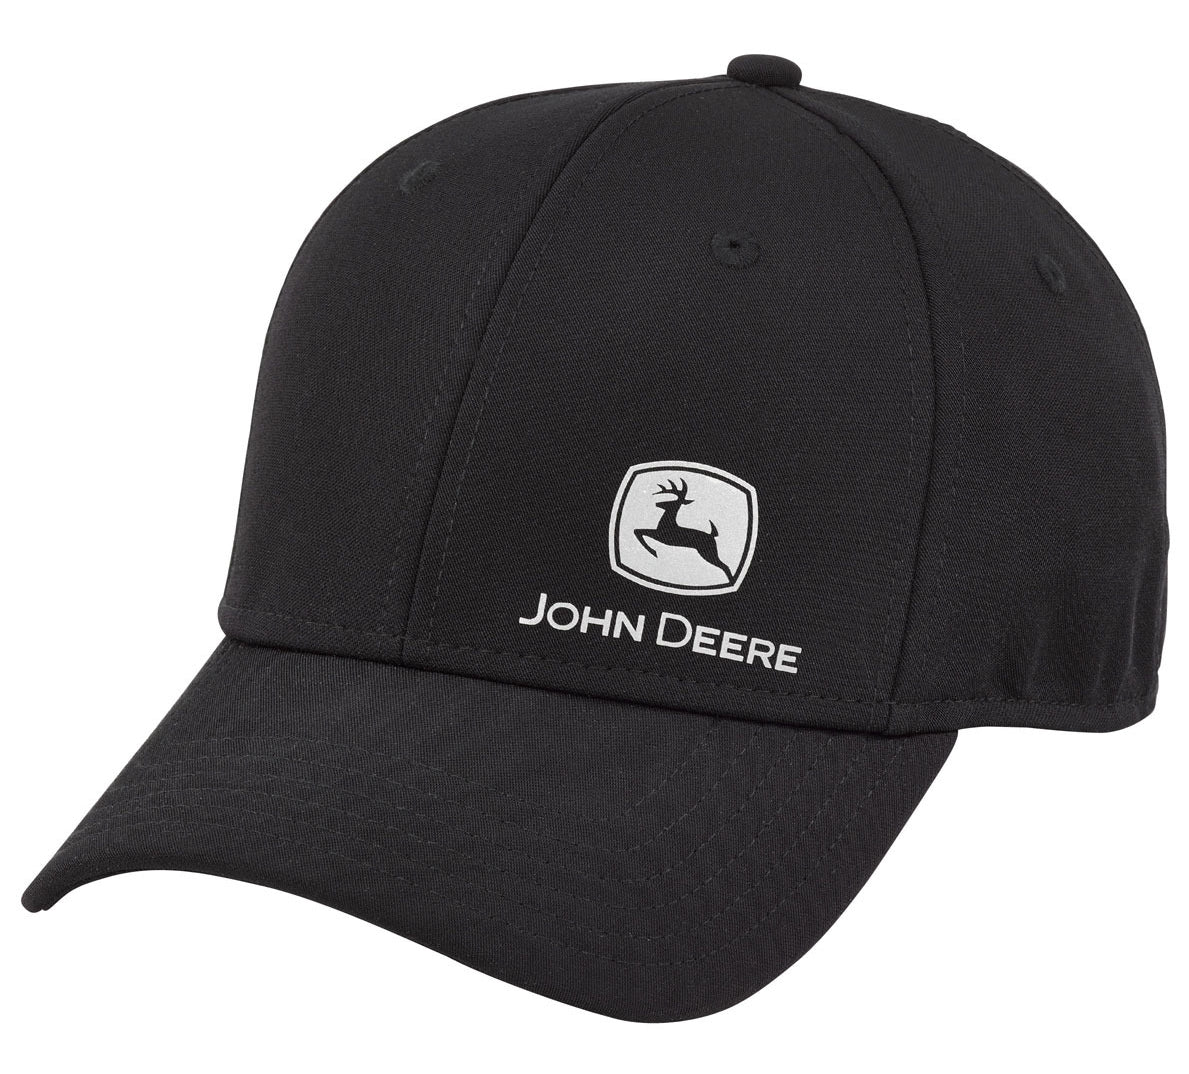 John Deere Men's Black Reflective Performance Cap/Hat - LP69119